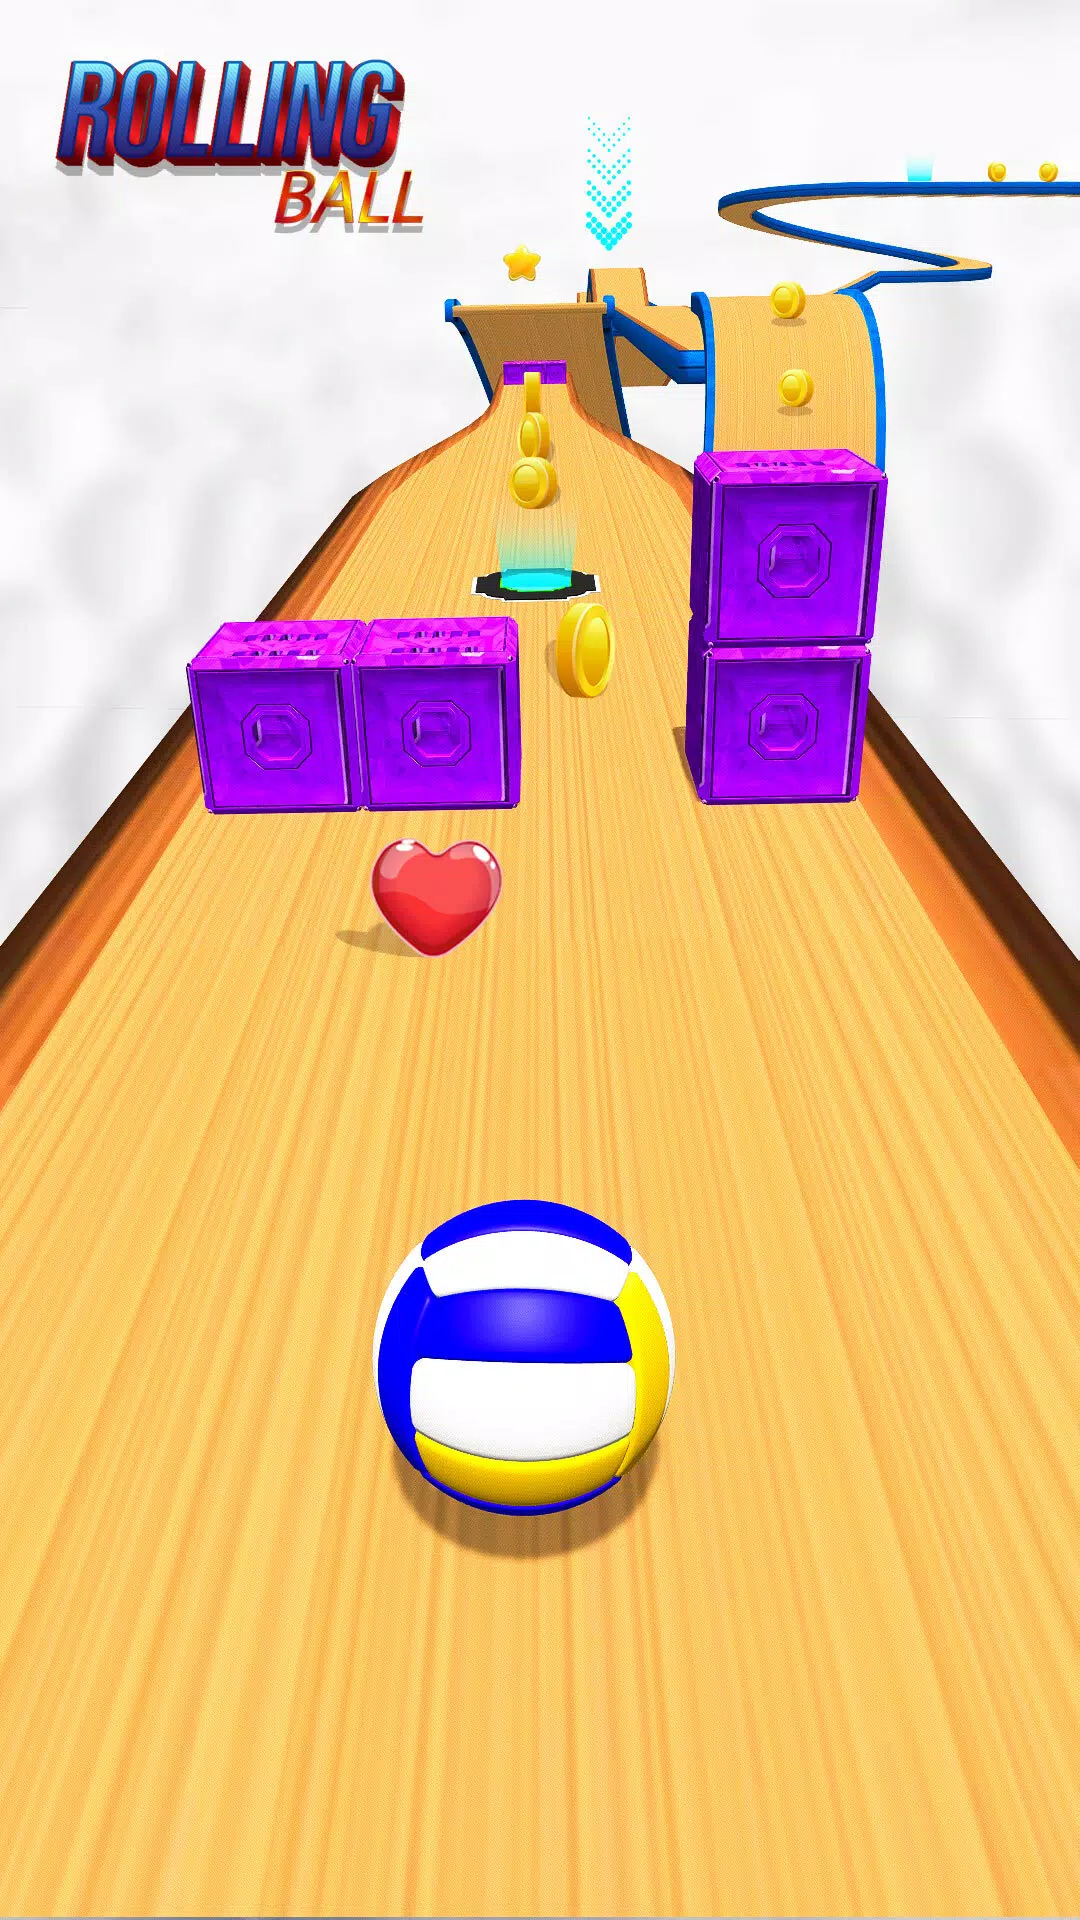 Crazy Slide Going Balls Game: Balance The Ball Run APK pour Android  Télécharger